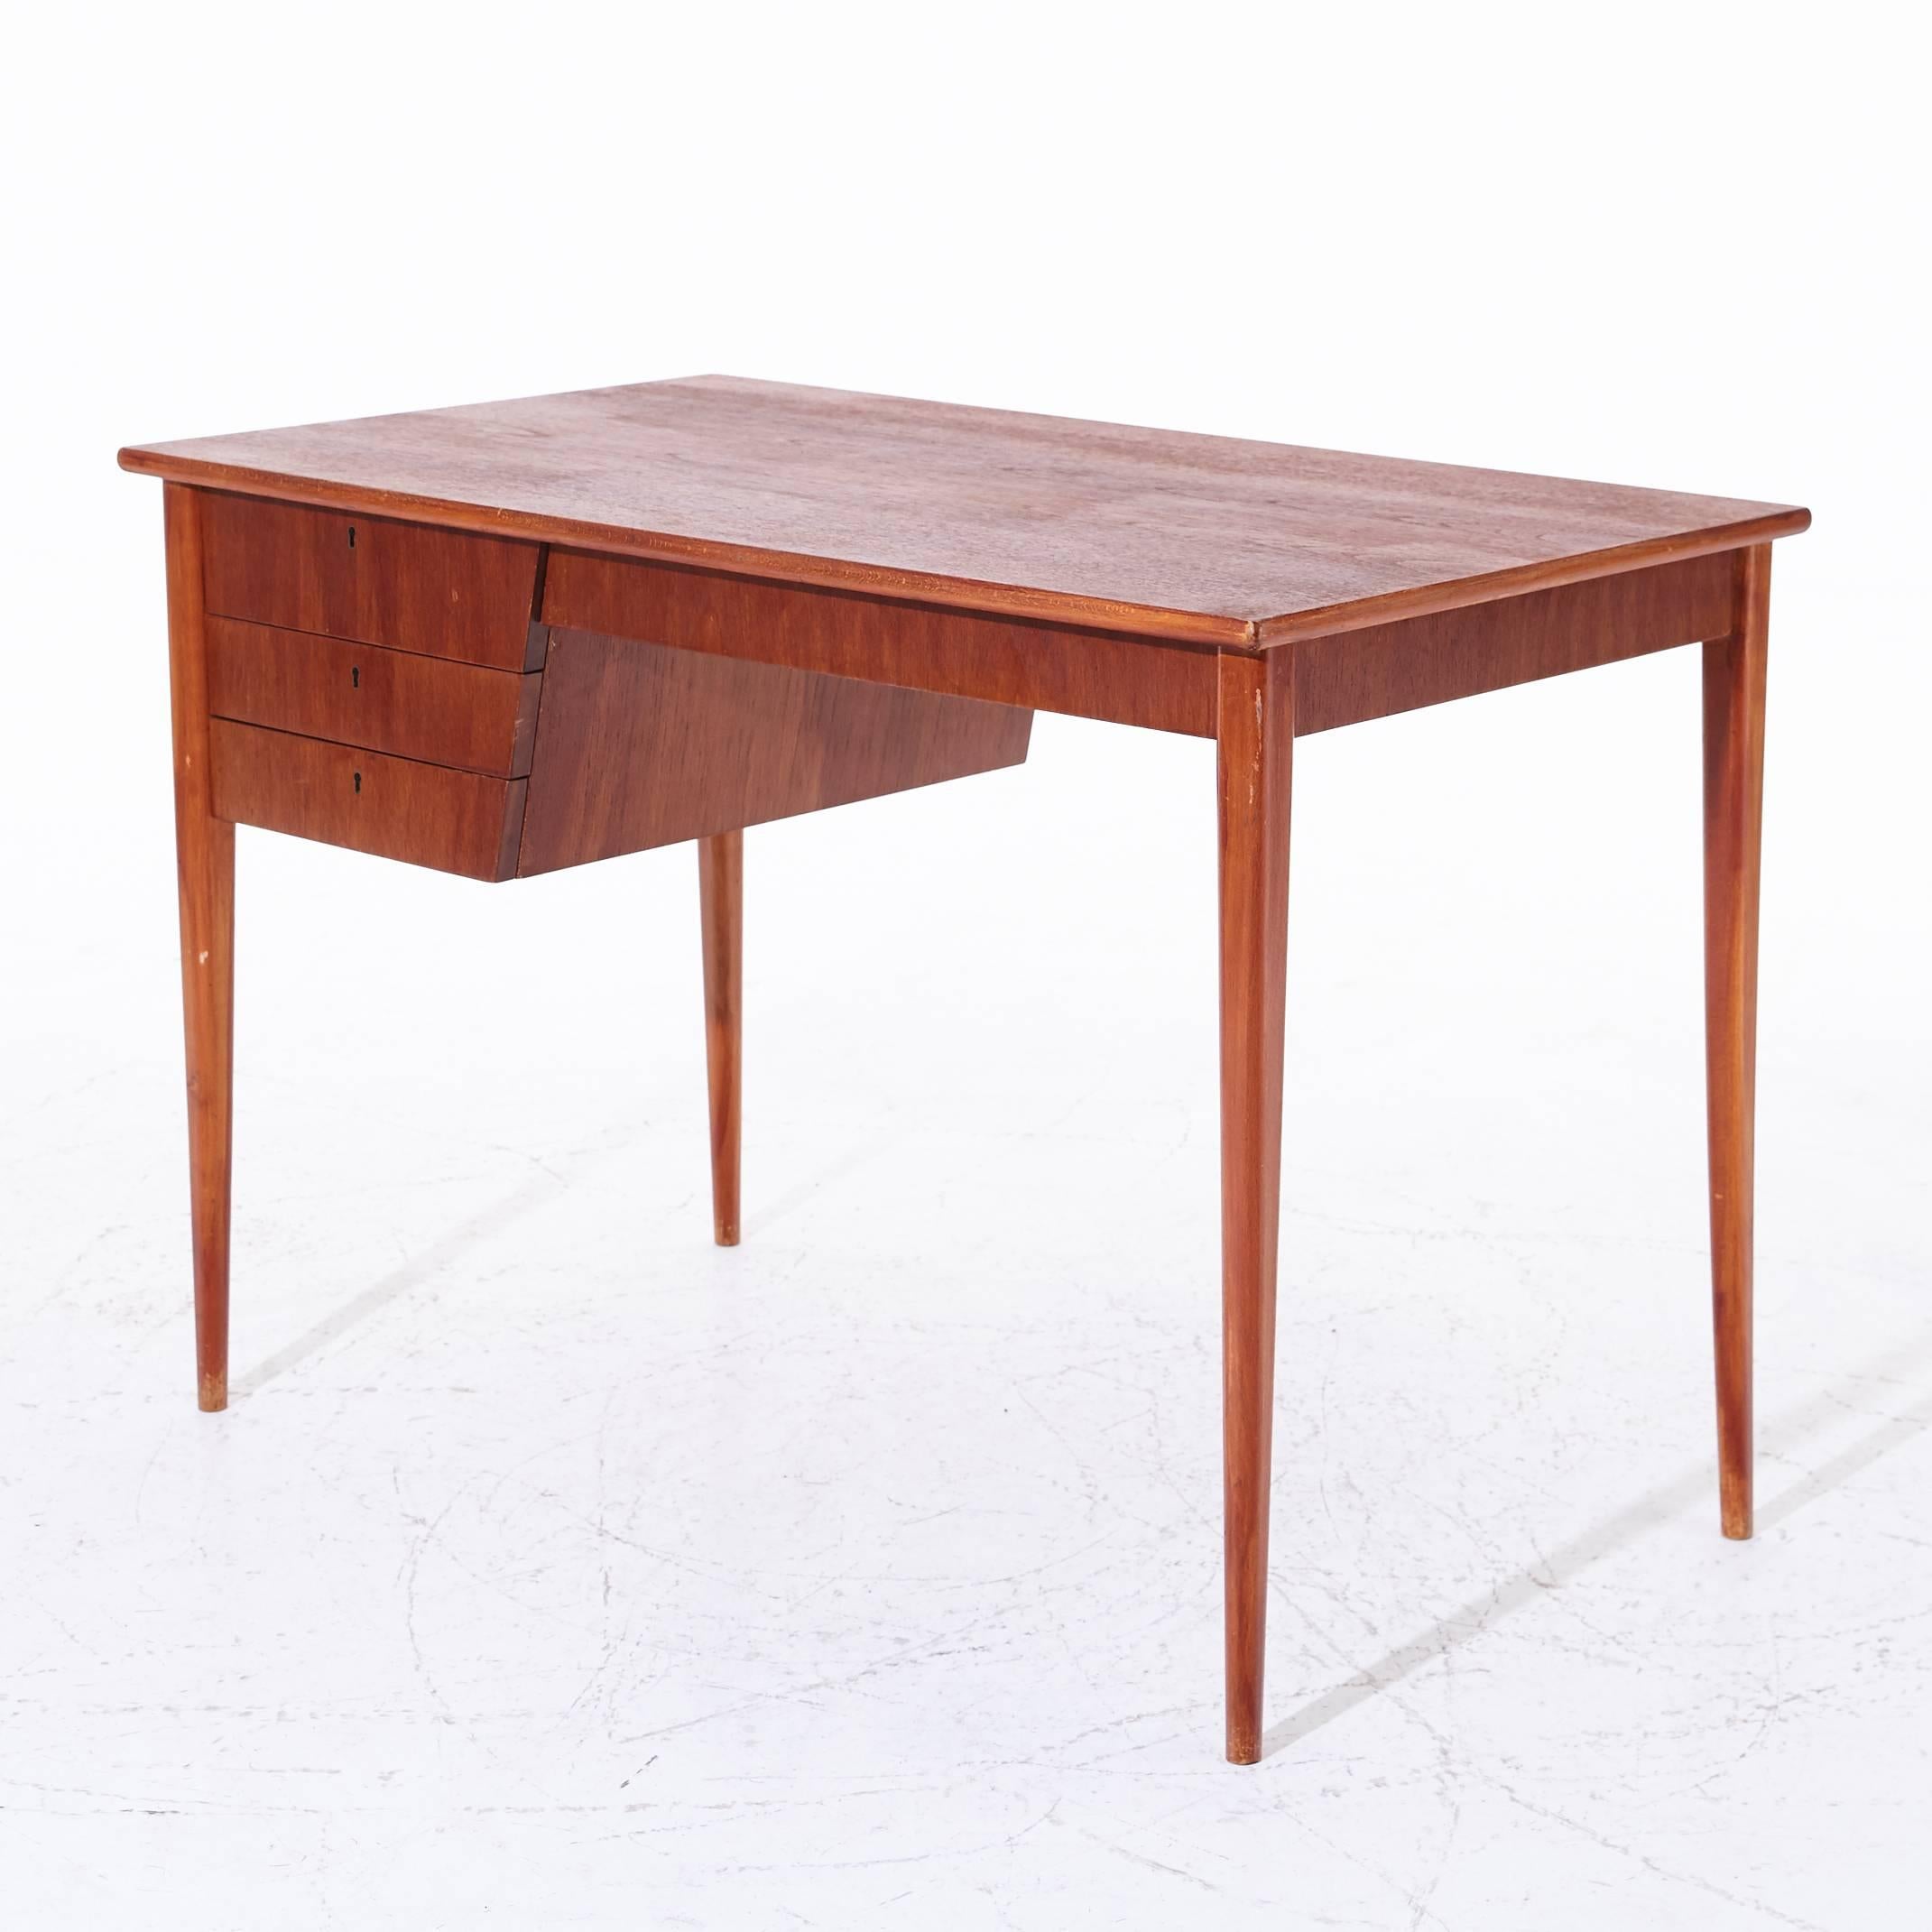 Danish teak desk, Severin Hansen, cabinetmaker, 1950s.
Includes two keys. 

Measures: Height 73, W 105 x D 60 cm.